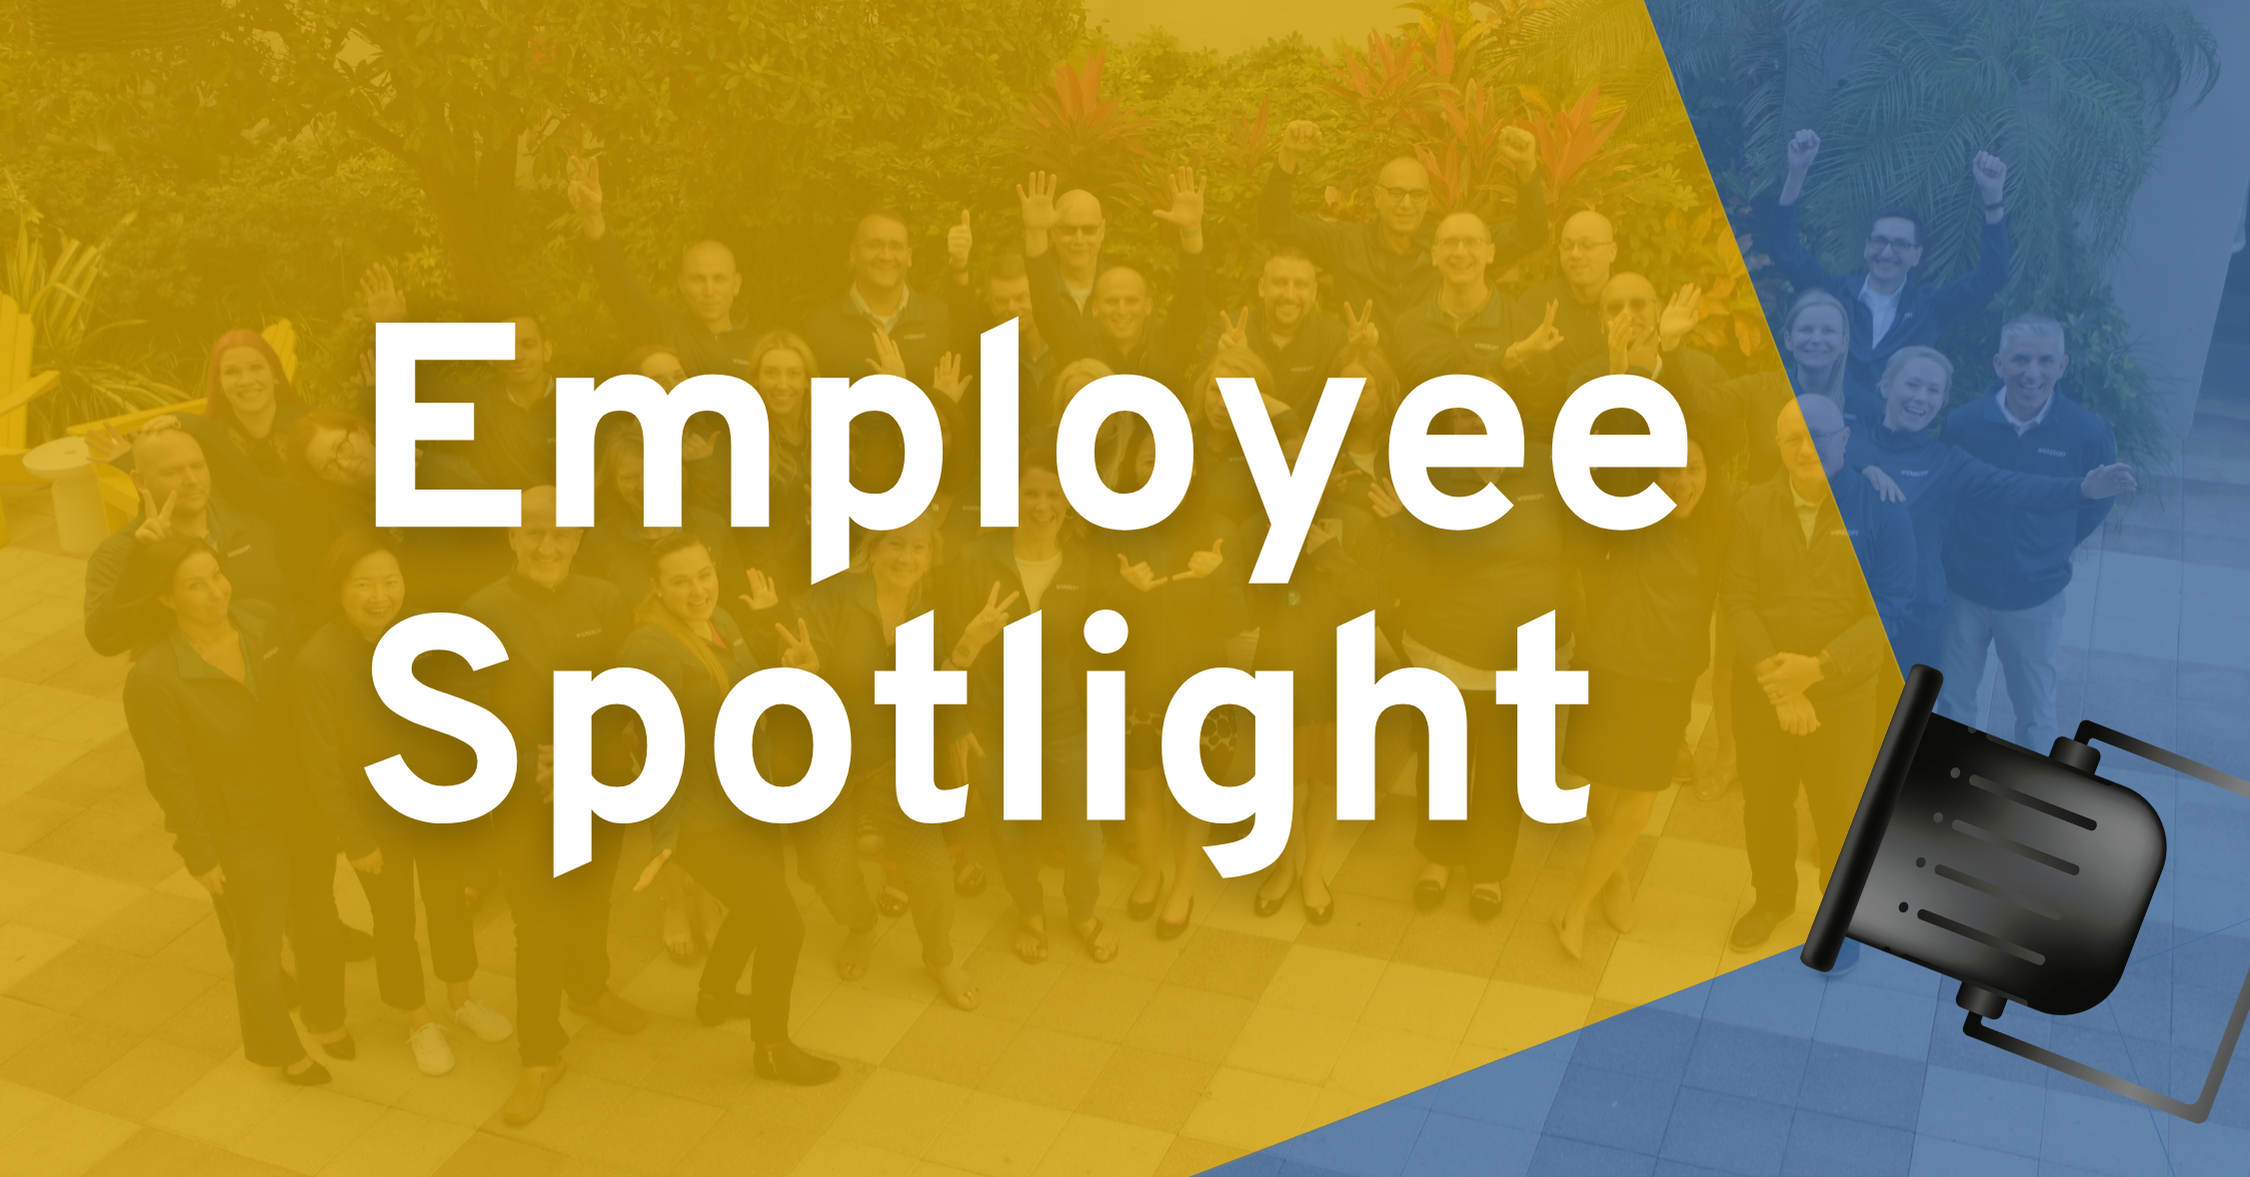 Employee Spotlight - Wicresoft Promotes Jane Ci